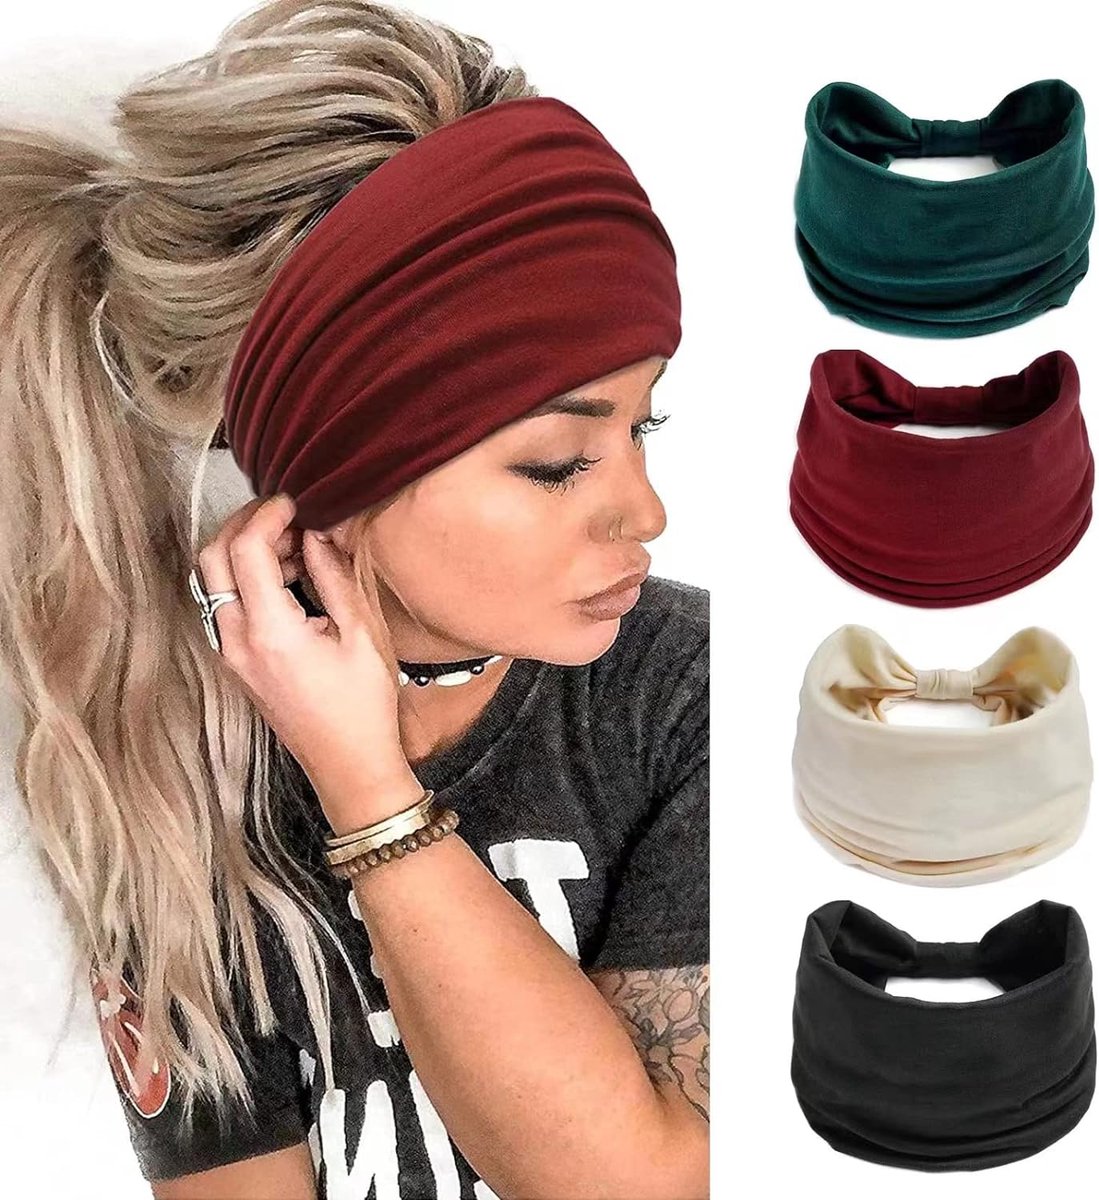 Haarband Dames Boho Headband Elastic Hoofdband Dames Brede Haarbanden voor Dames Hair Band Yoga Hair Accessories for Women 4 Stuks (Eenvoudig)